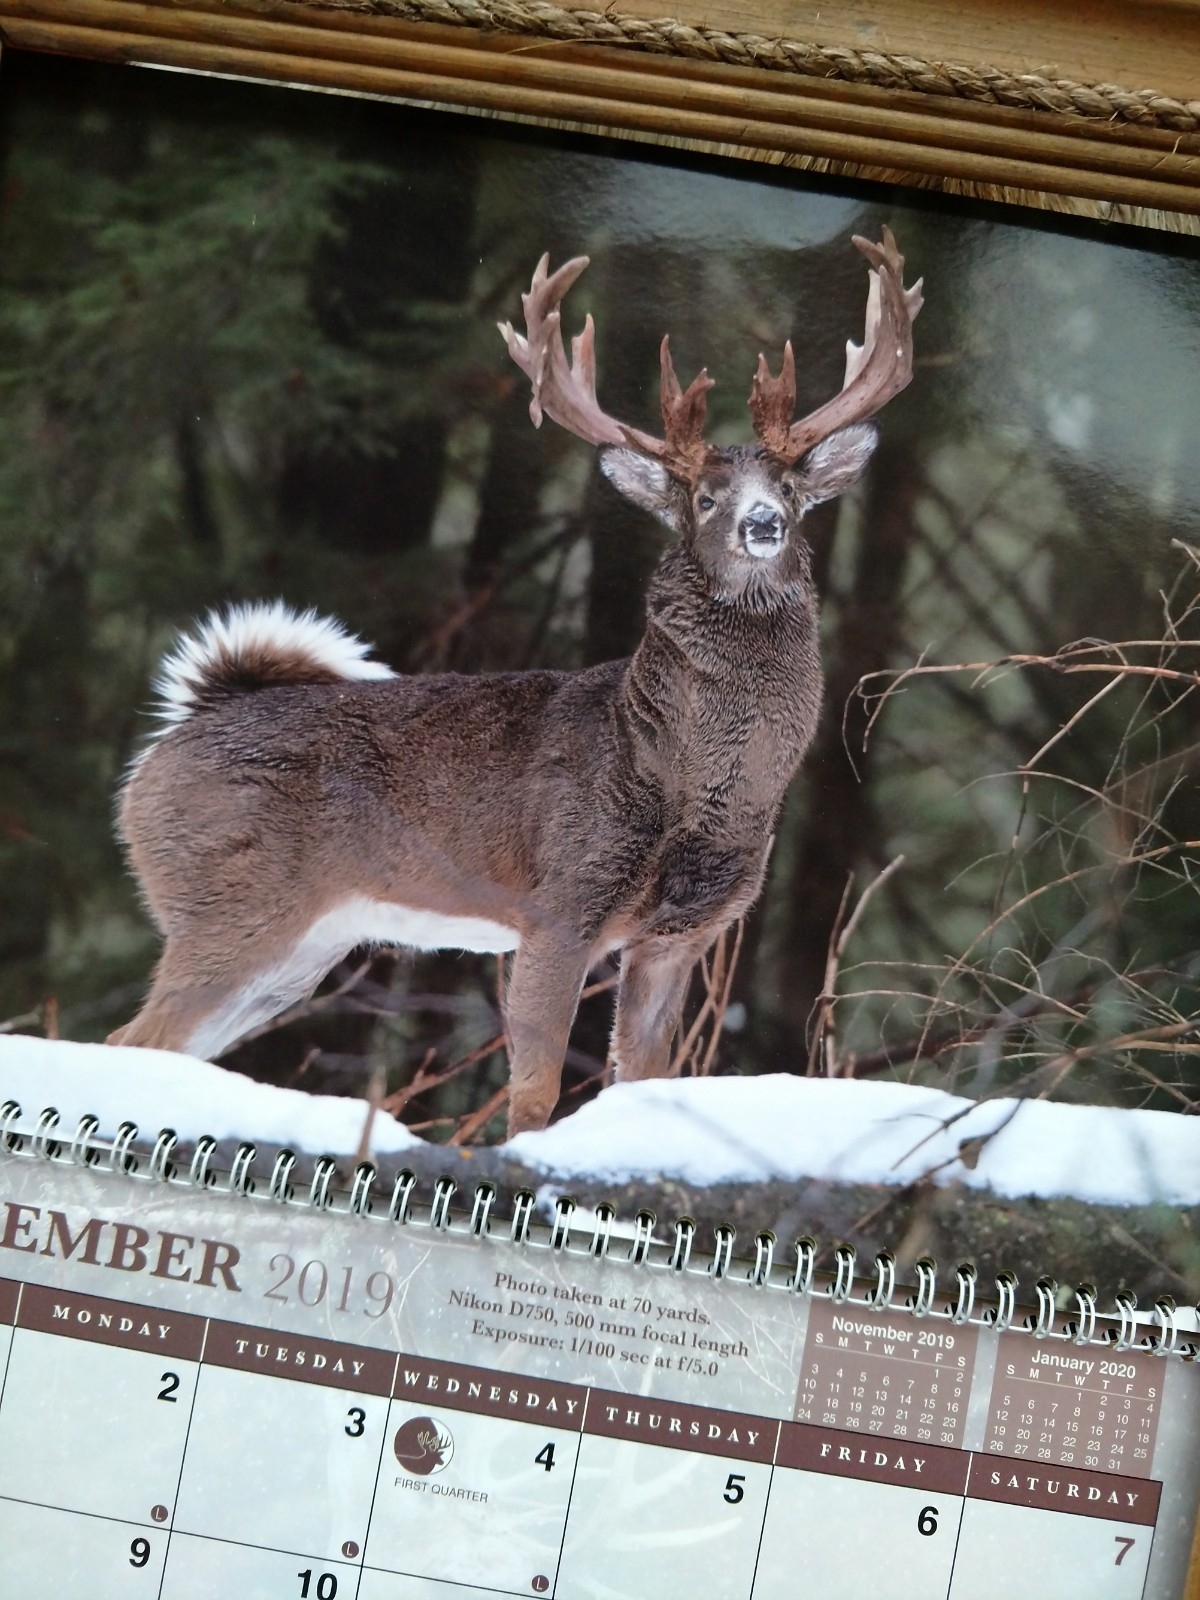 Deer Calendar - Billkinney %